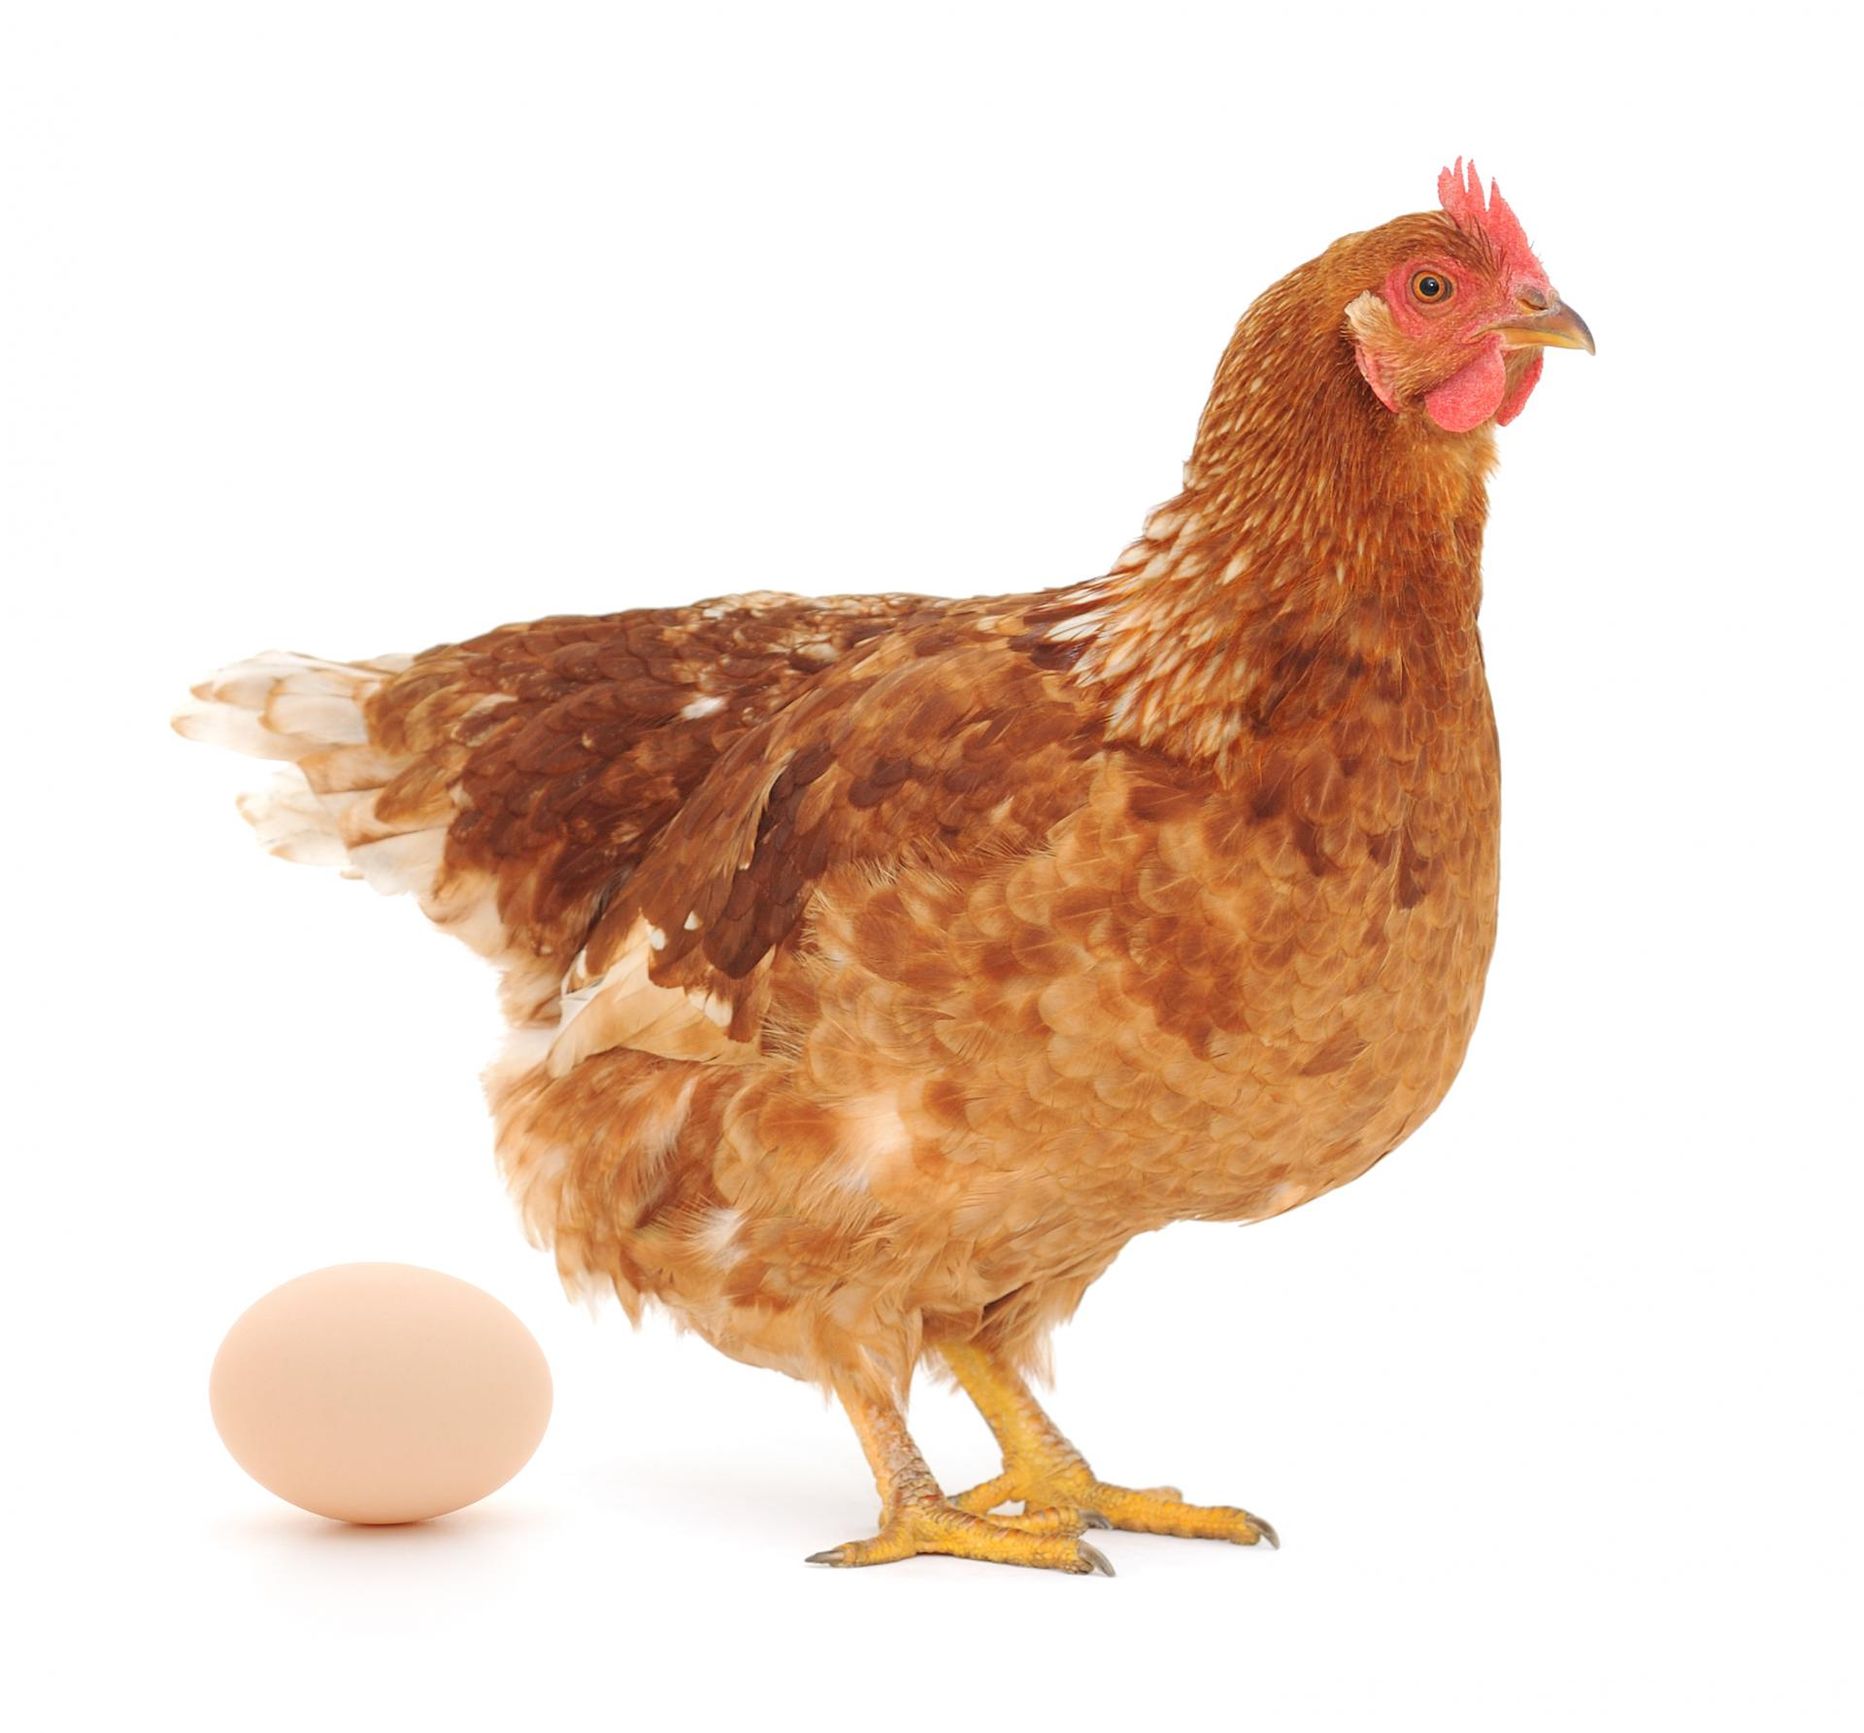 Kas munal ja munal on vahe? FOTO: Shutterstock